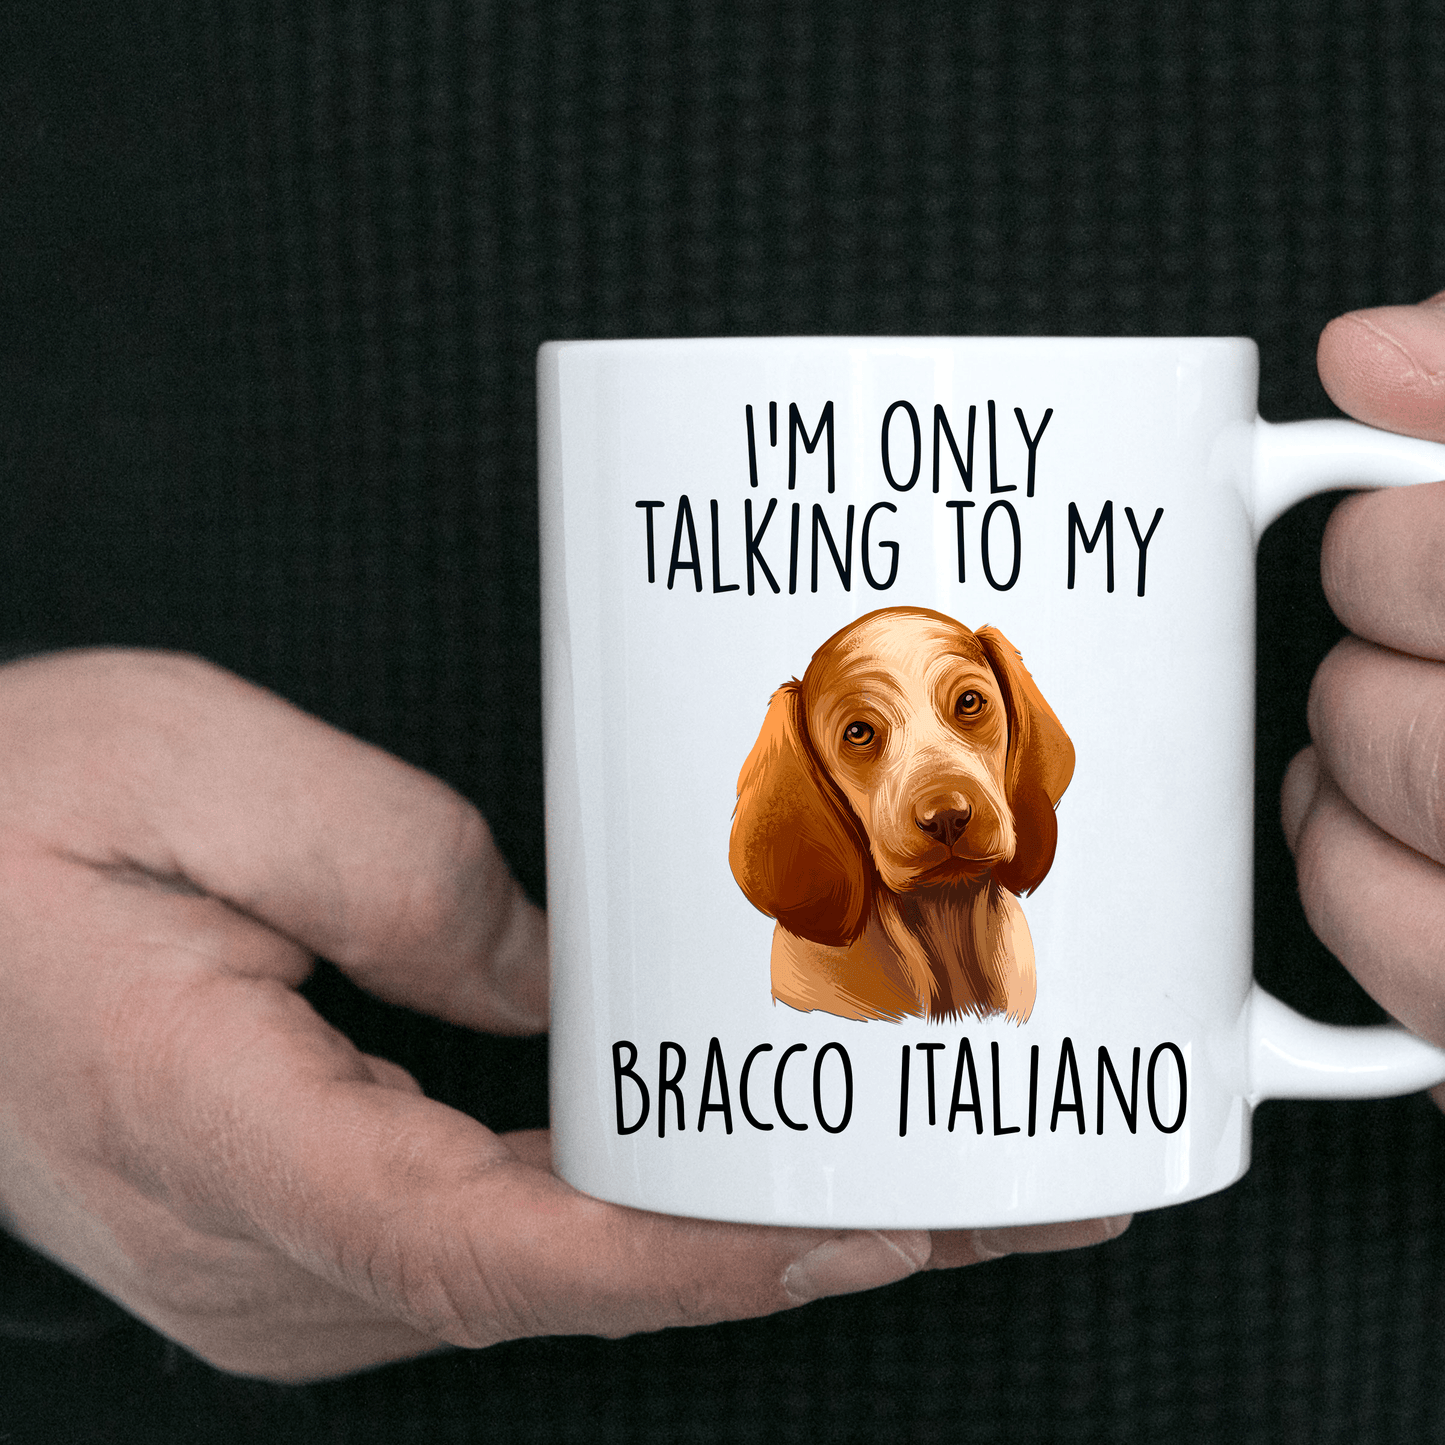 Bracco Italiano Funny Ceramic Coffee Mug - I'm Only Talking to my Dog